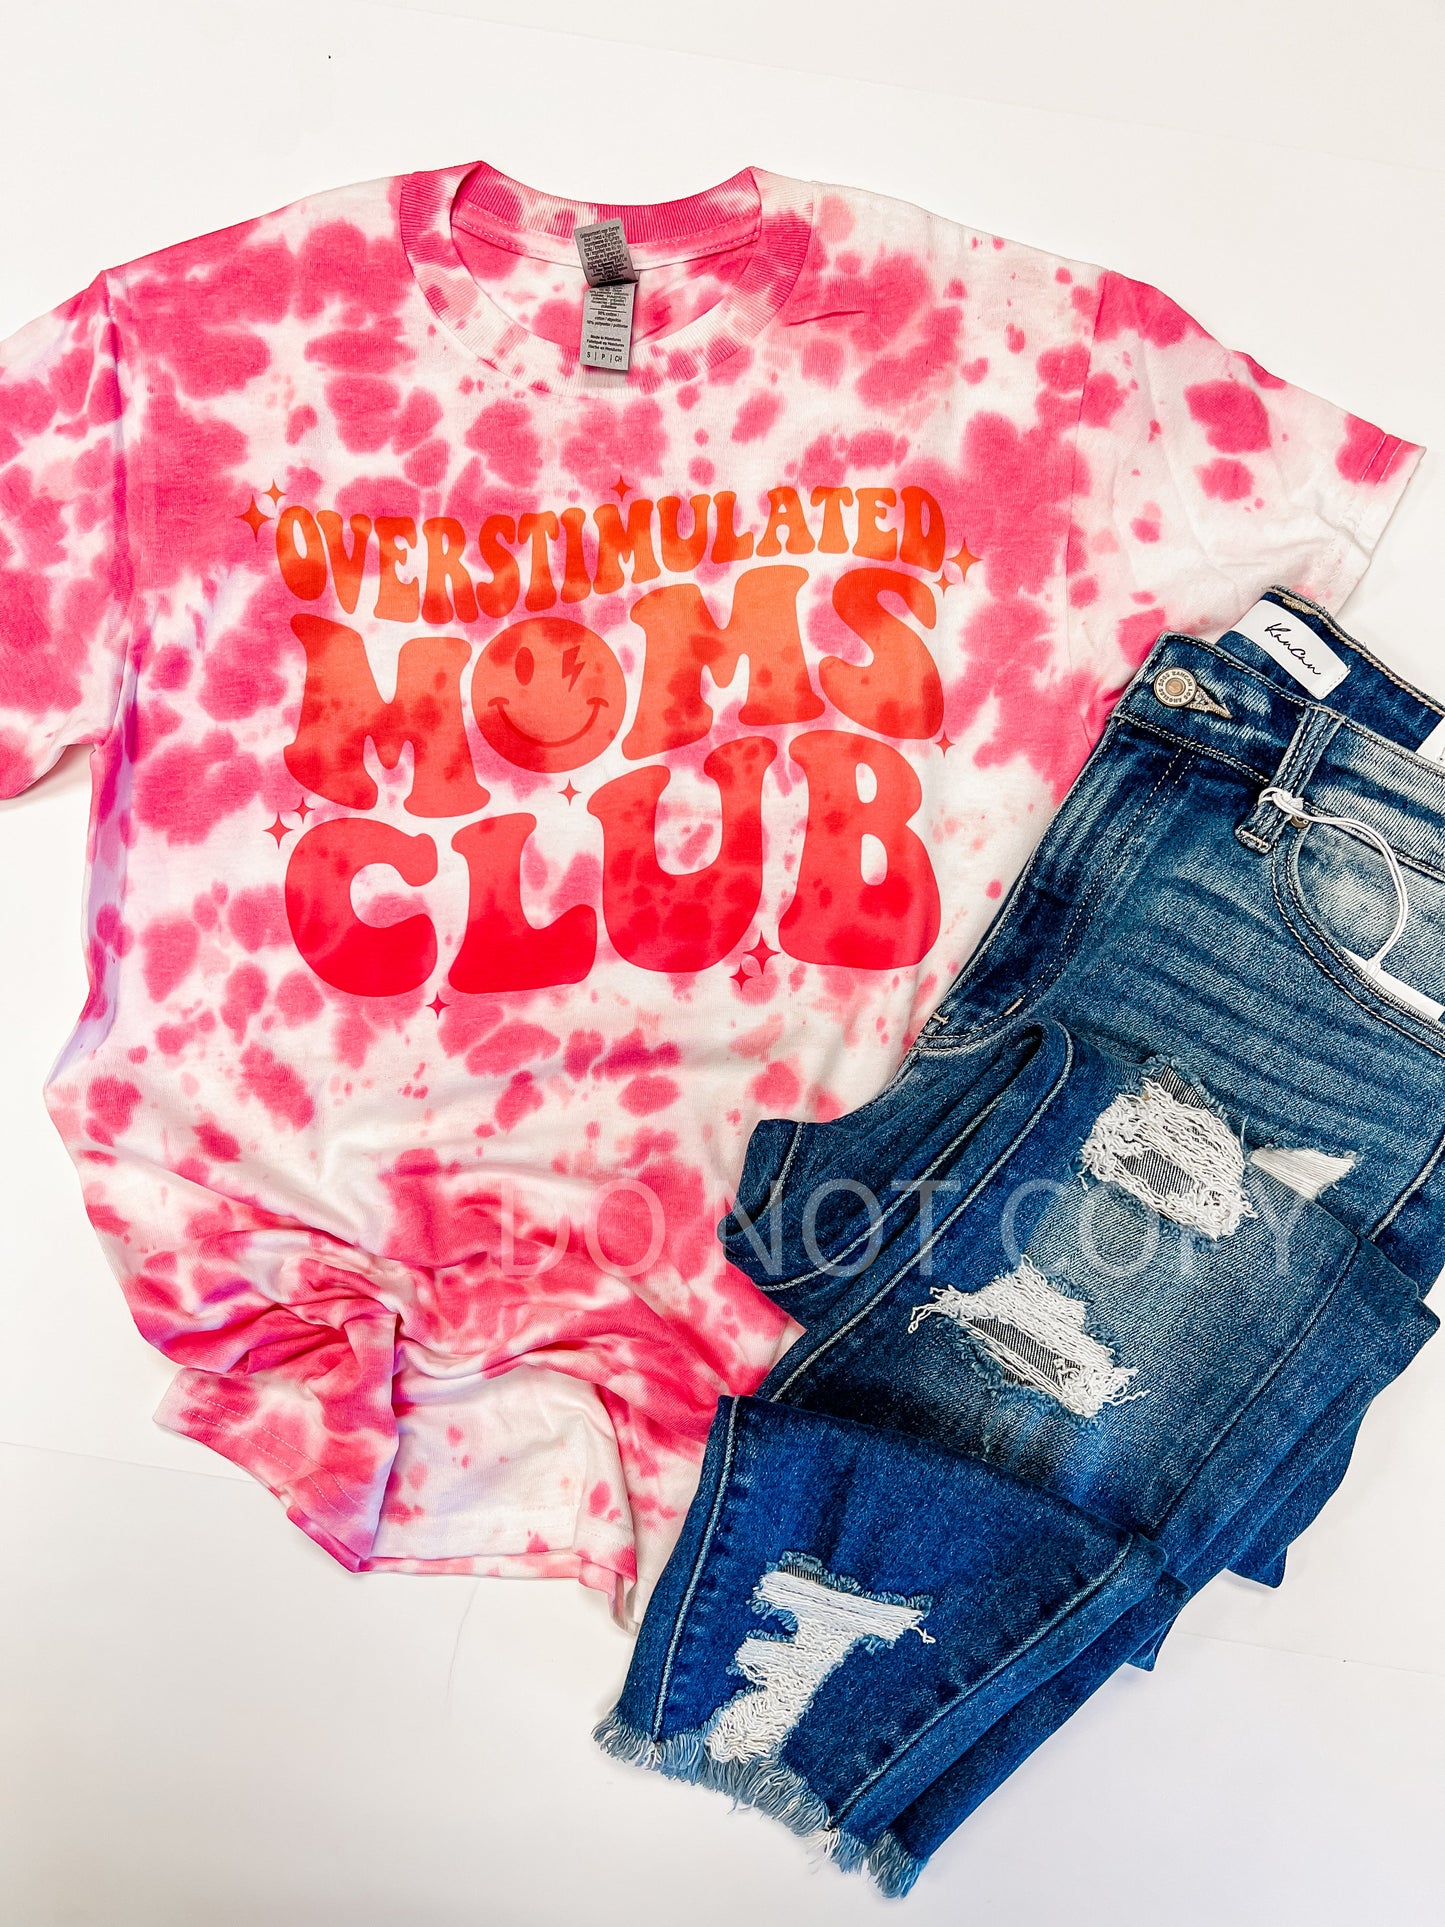 Overstimulated Moms Club ~ Dyed Sweatshirt•Tee